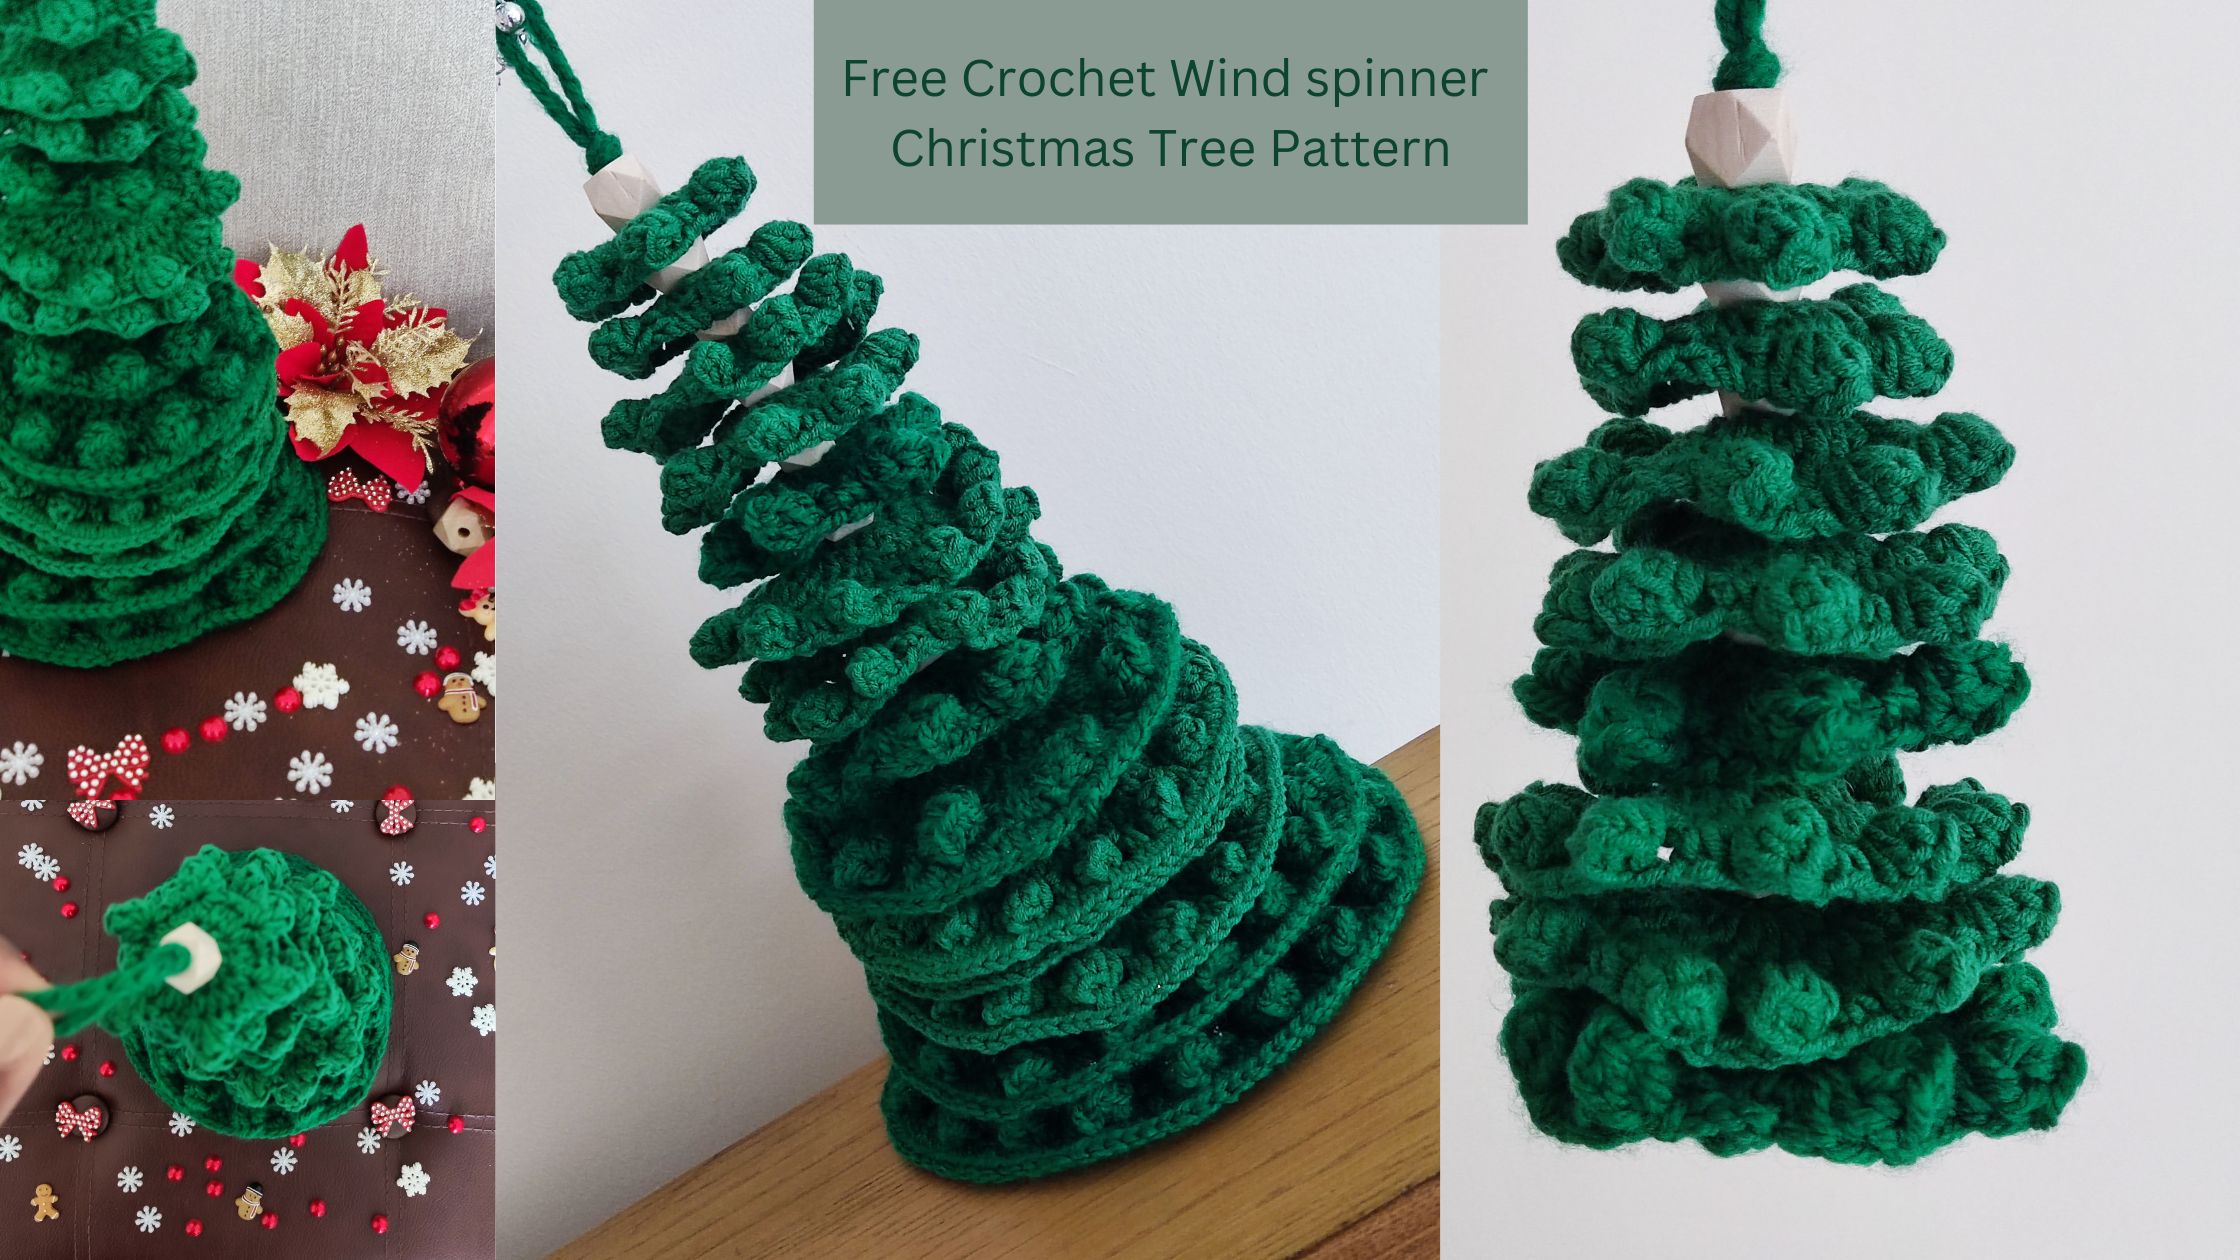 Free crochet Christmas tree crochet pattern